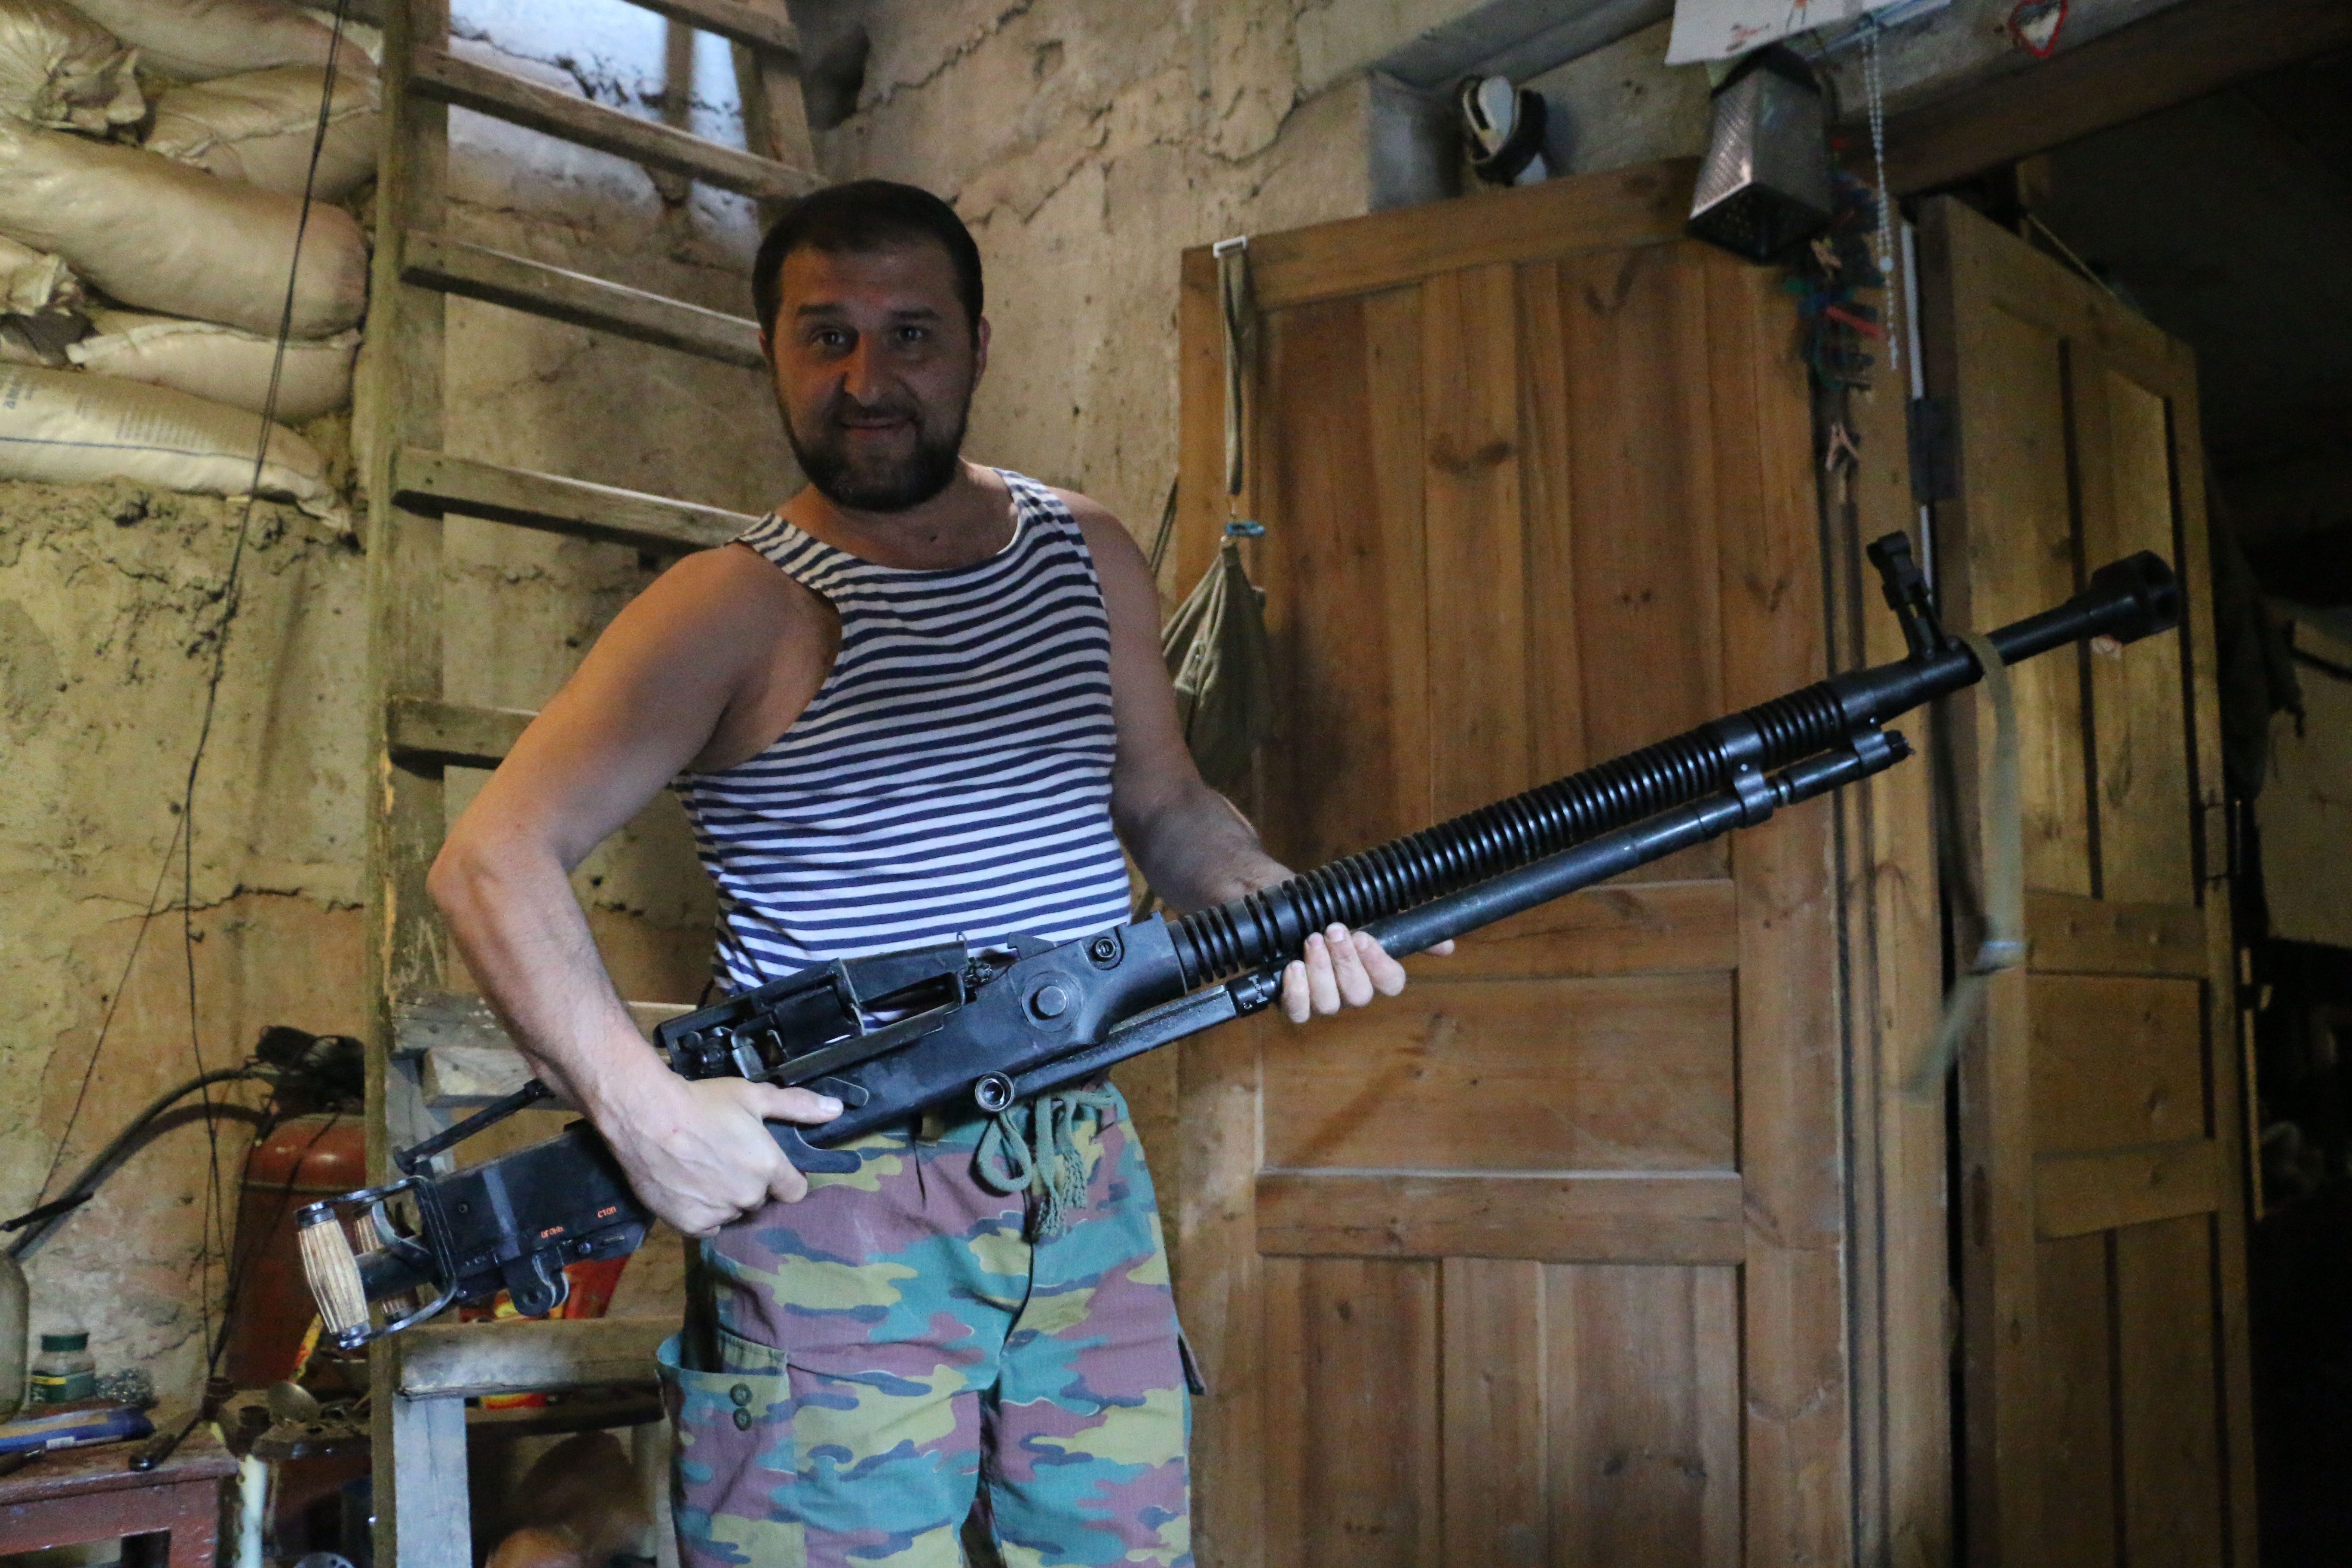 Ukrainian troops use surplus Soviet weapons on the front lines in eastern Ukraine.